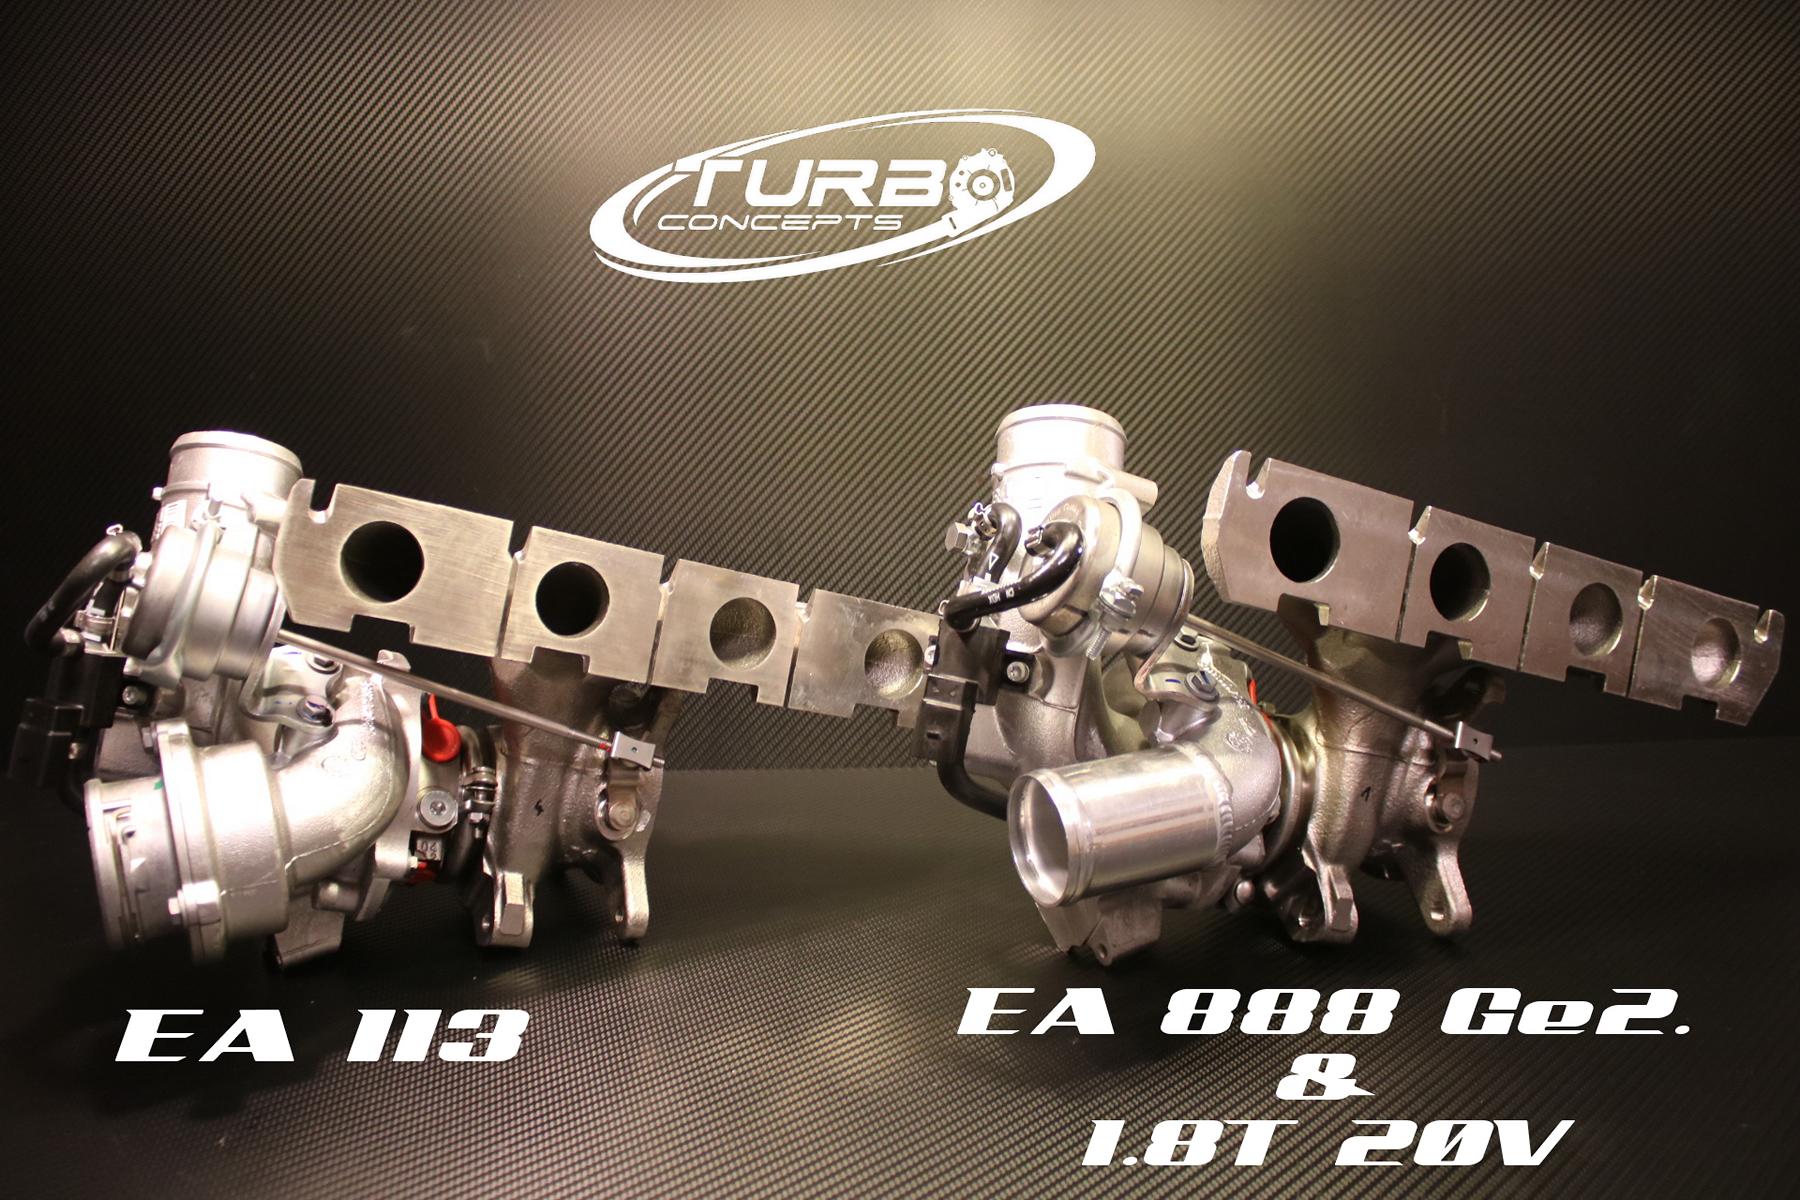 K04.064 Plus X - RS Upgrade Turbo 450PS im 2.0TFSi  quer S3 / TTs / Leon Cupra R / Golf 5 6 Edition